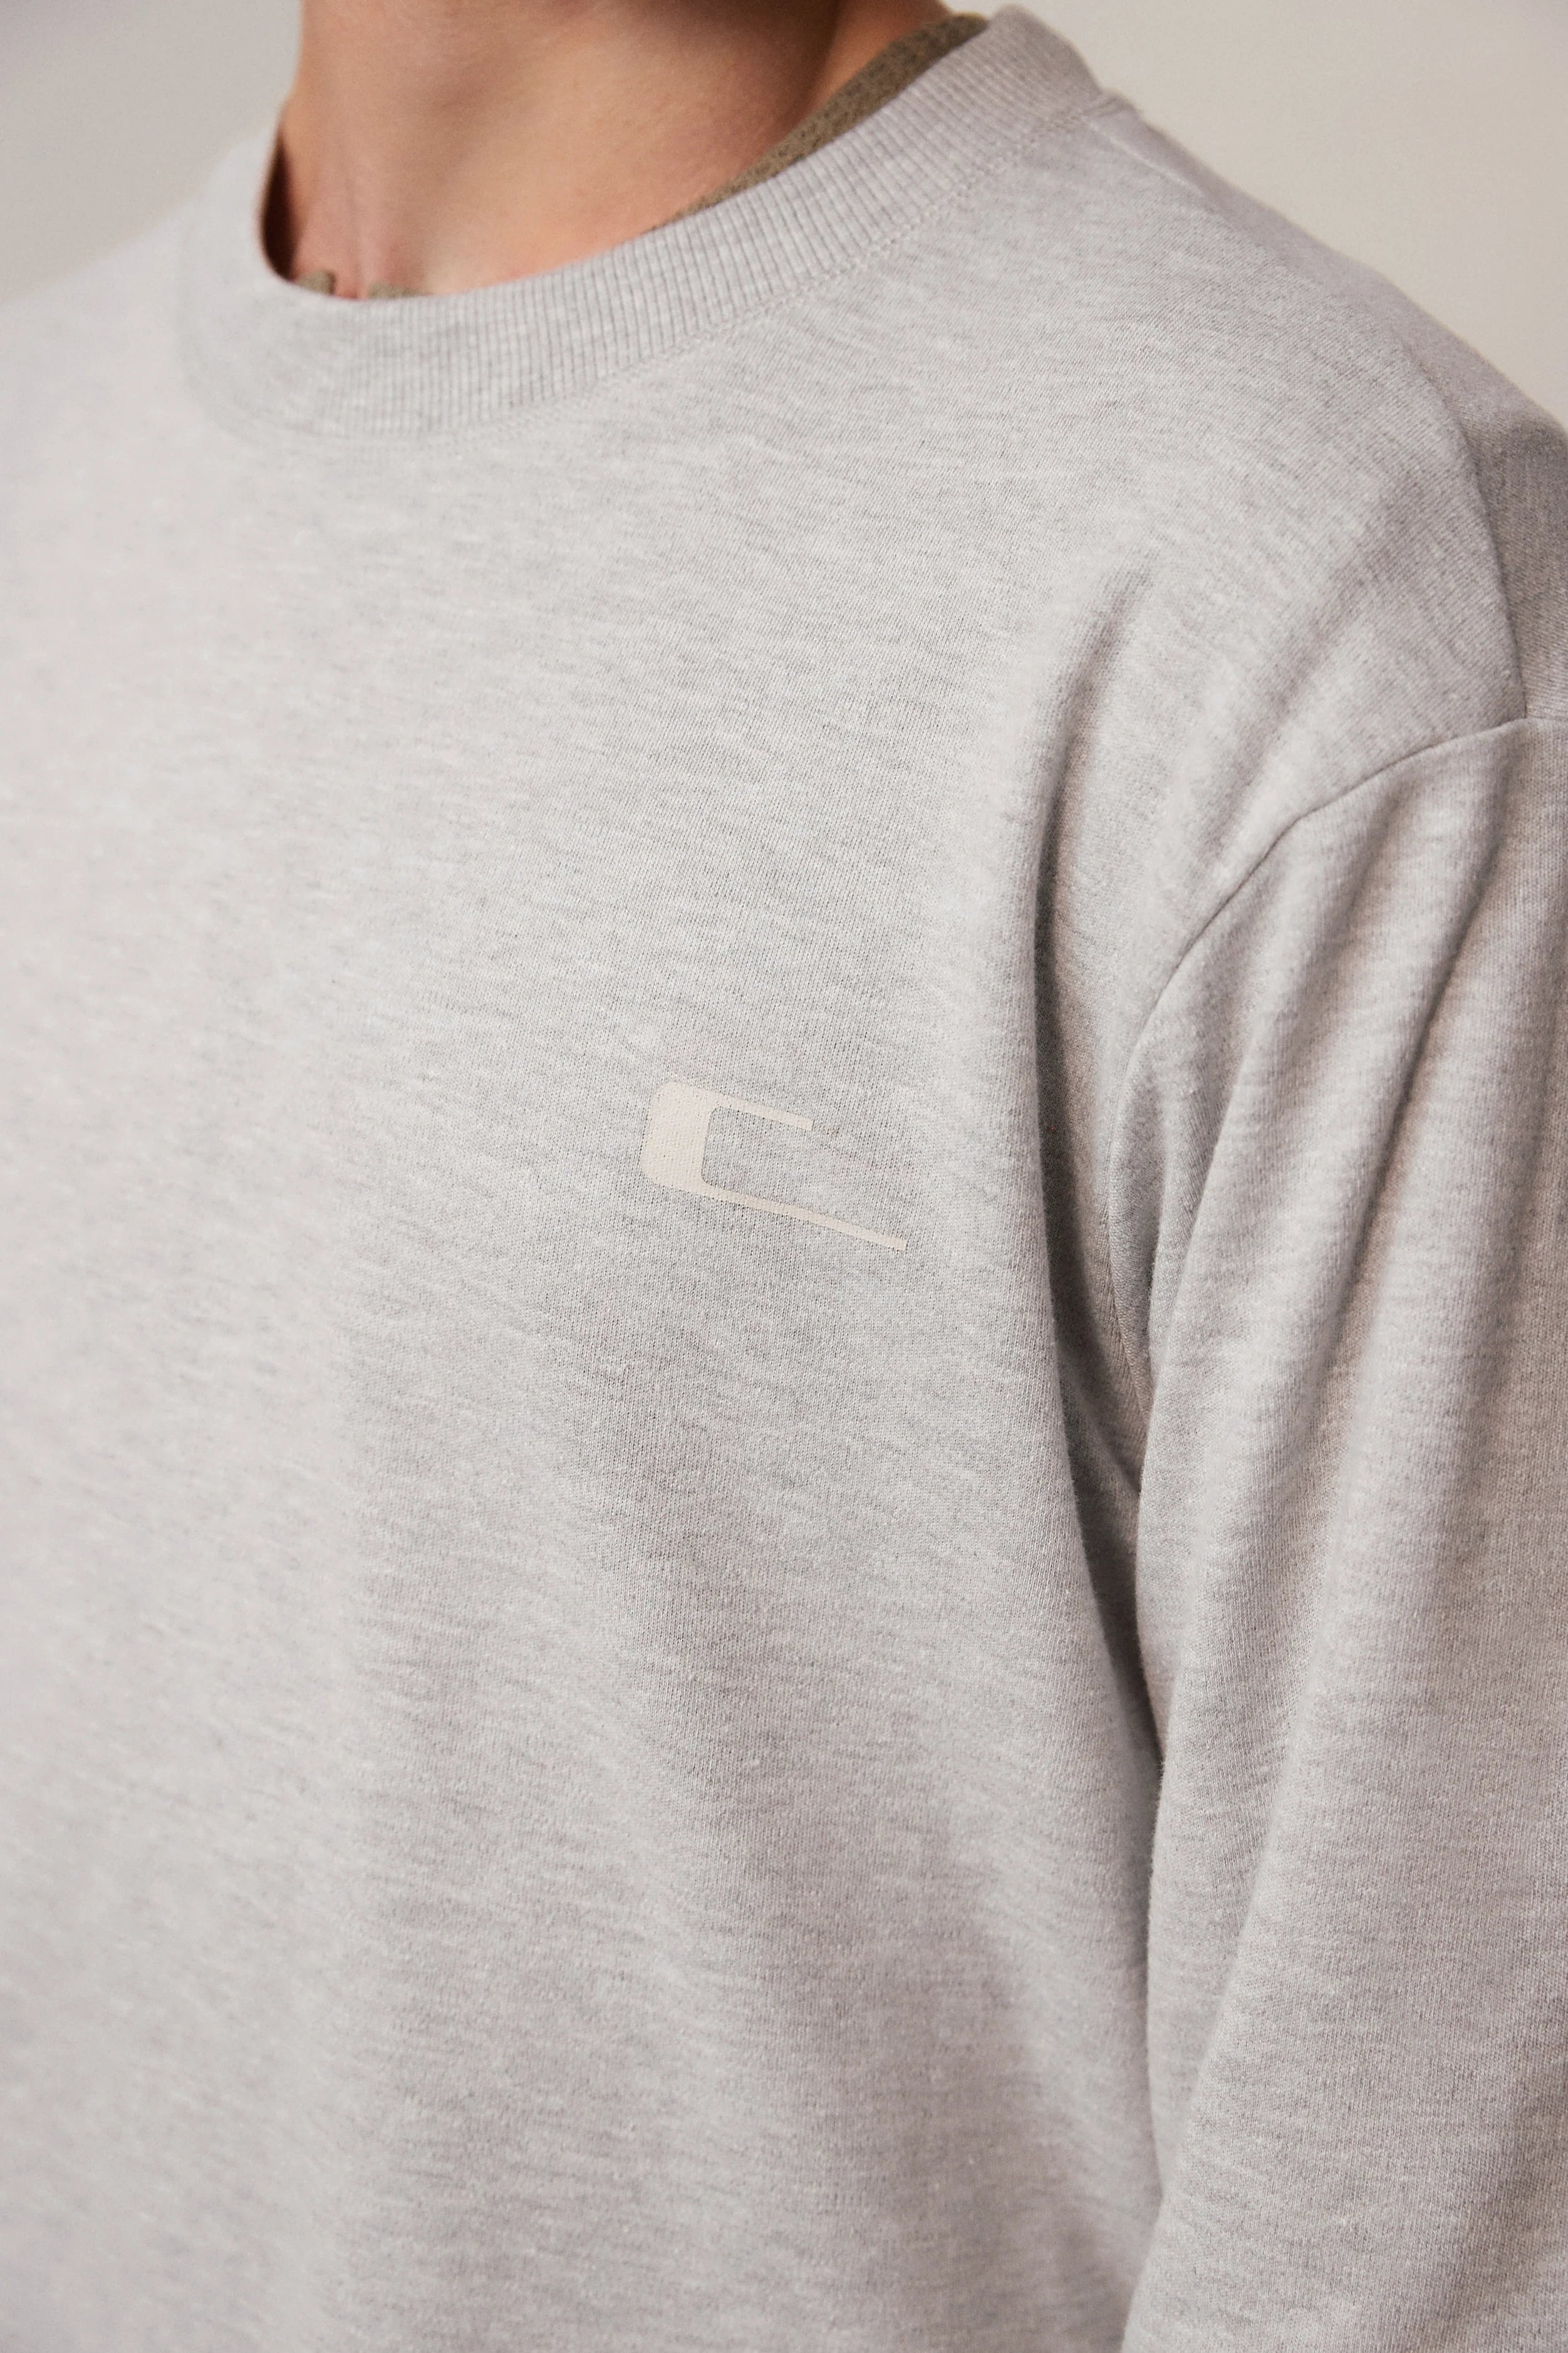 Carrer Casp T-Shirt Long Sleeve in Gray